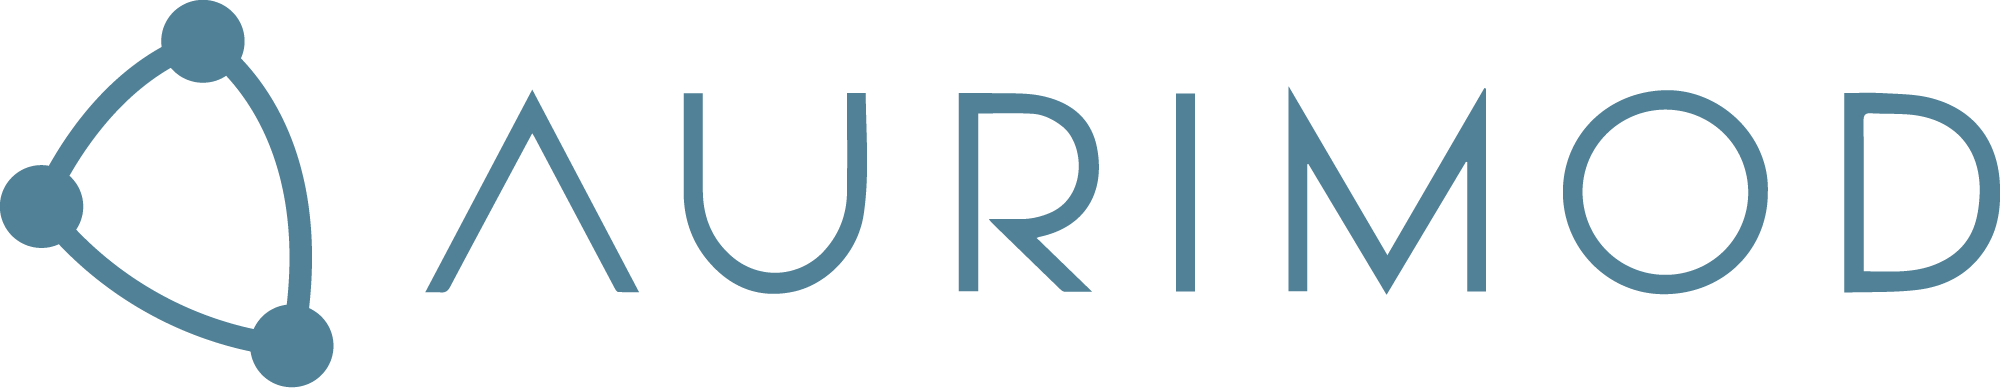 Aurimod-logo_Petrol